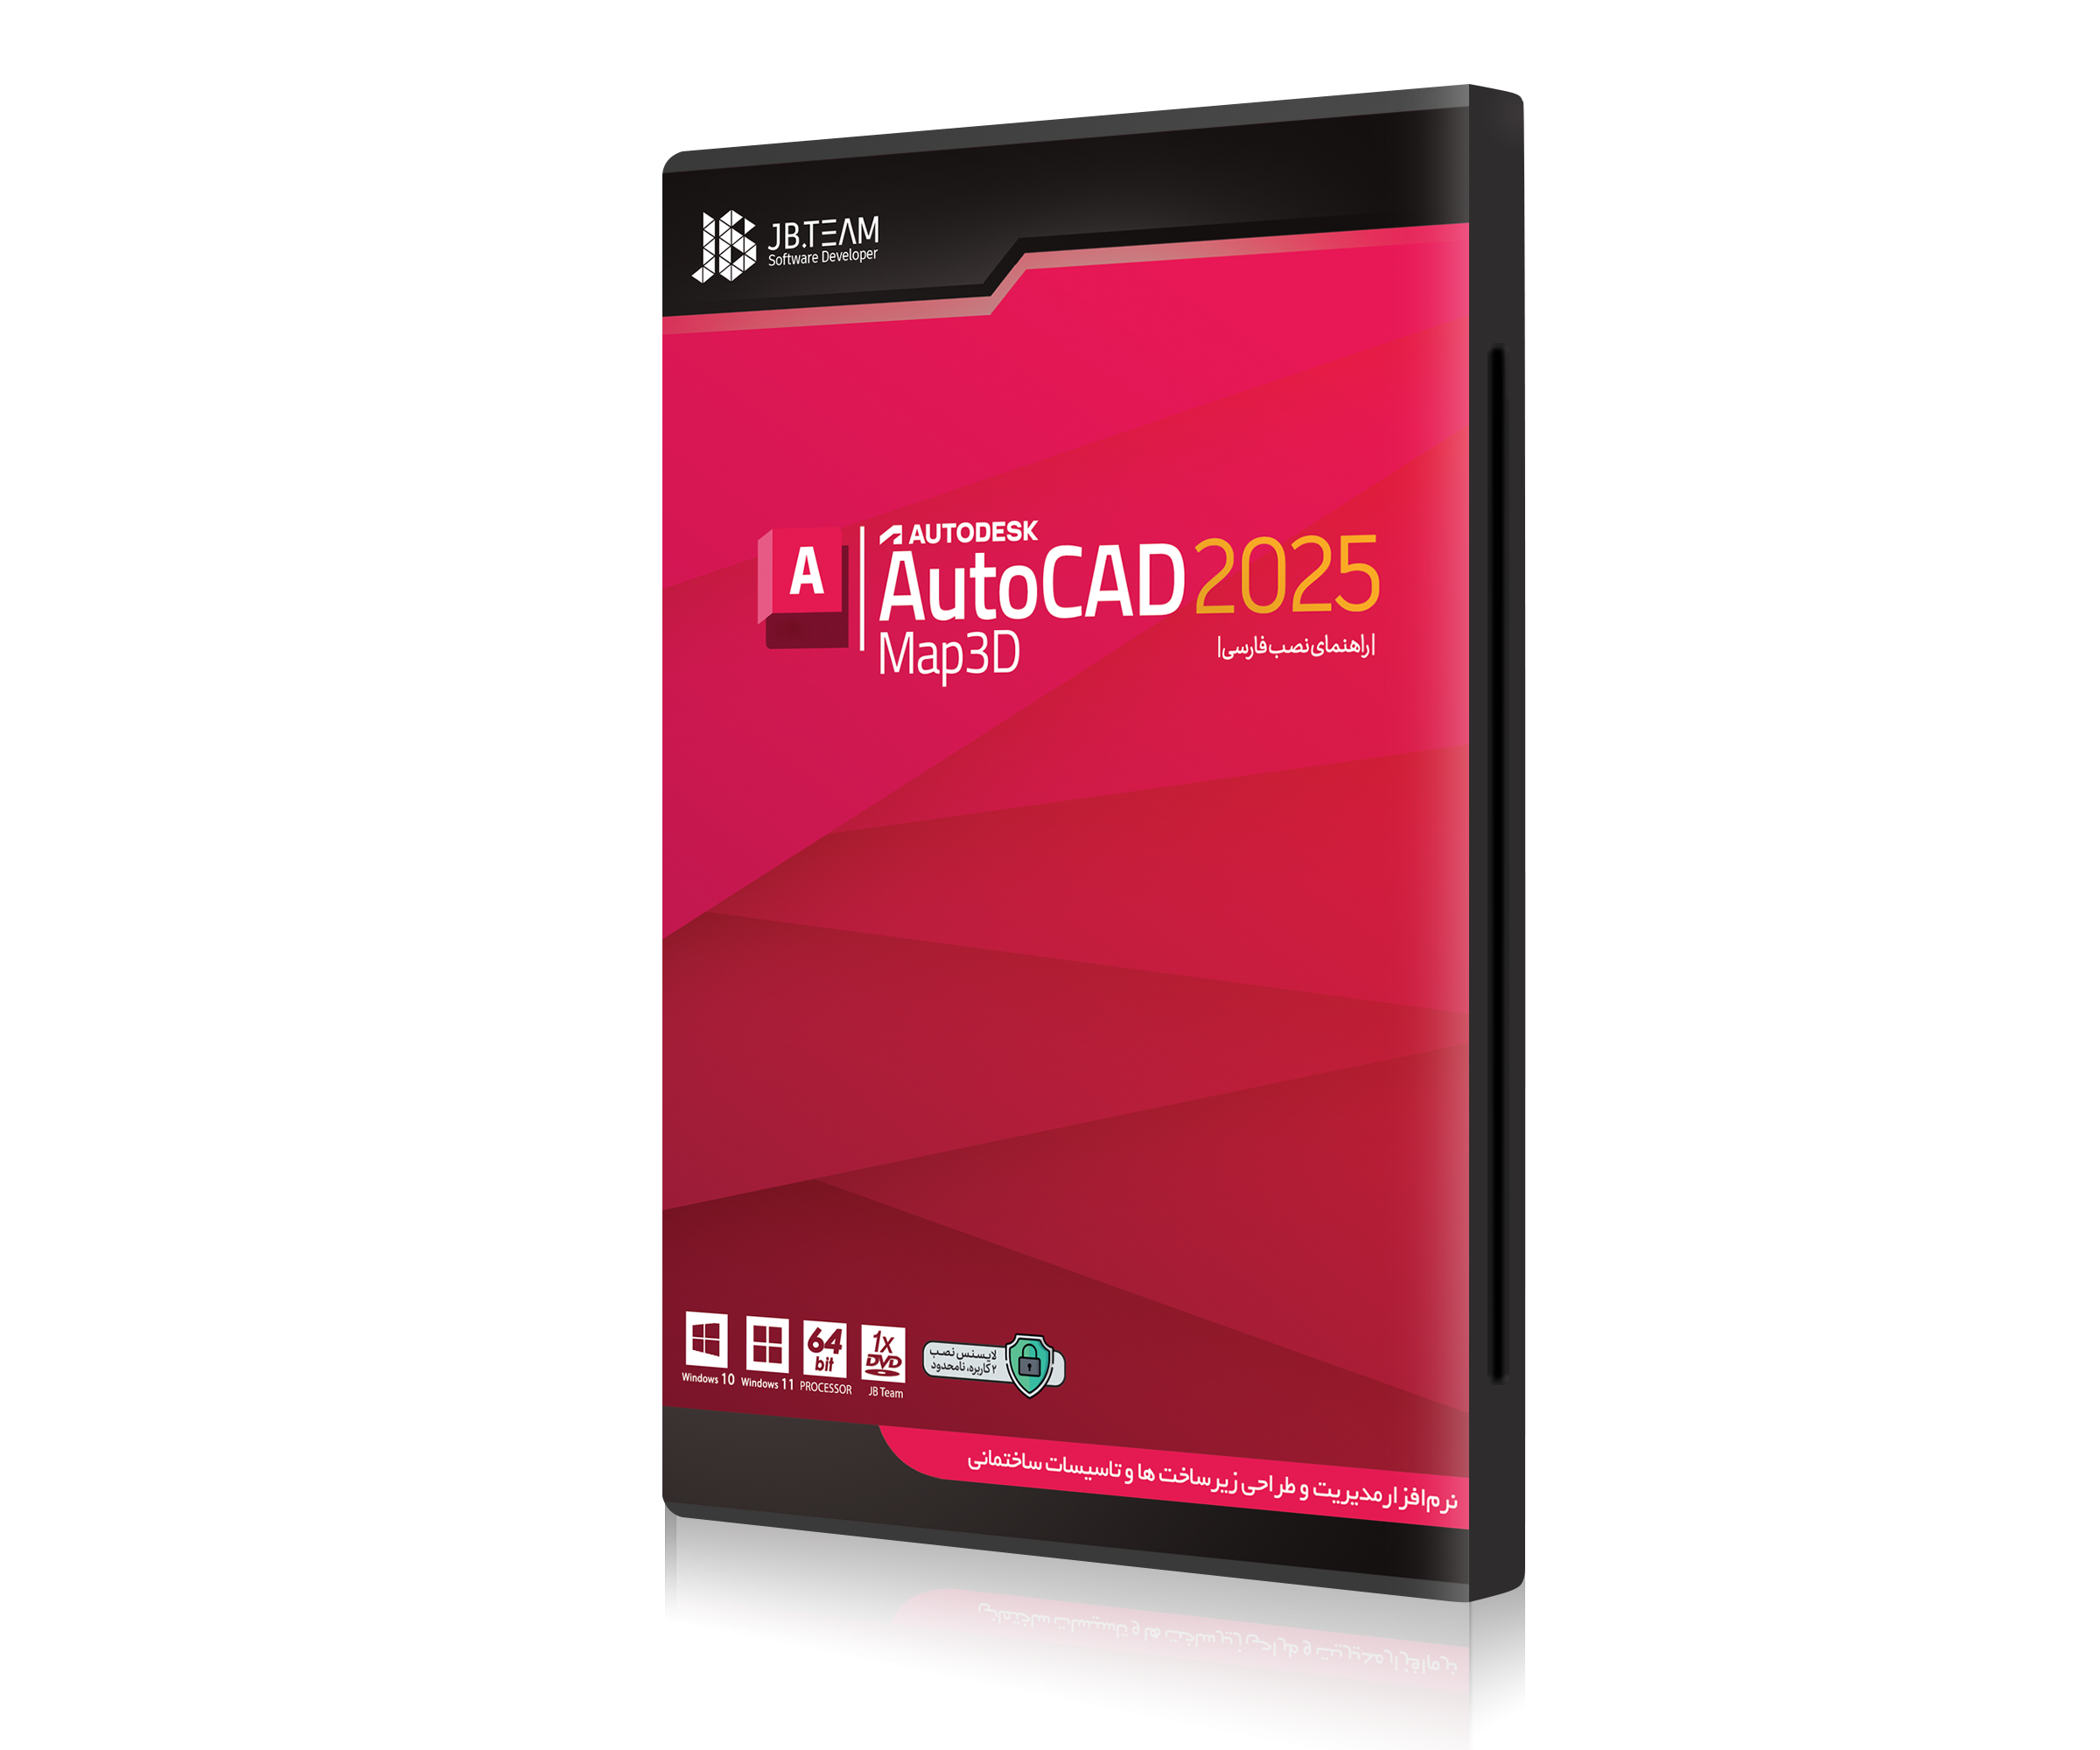 نرم افزار اتوکد مپ تری دی 2025 - 2025 AutoCAD Map 3D